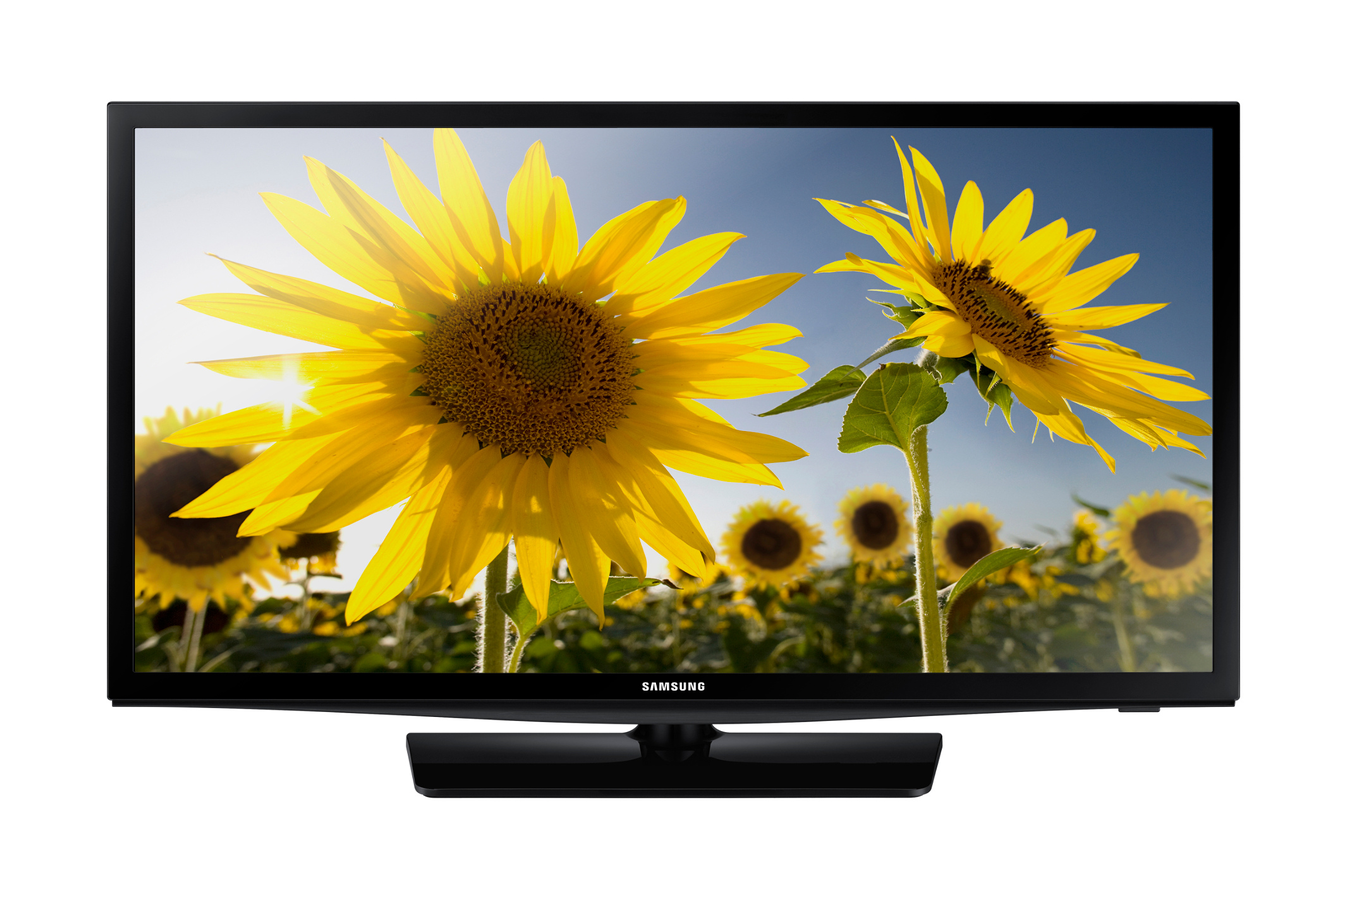 TV LED Samsung UE28H4000 28h4000 (4014863) | Darty